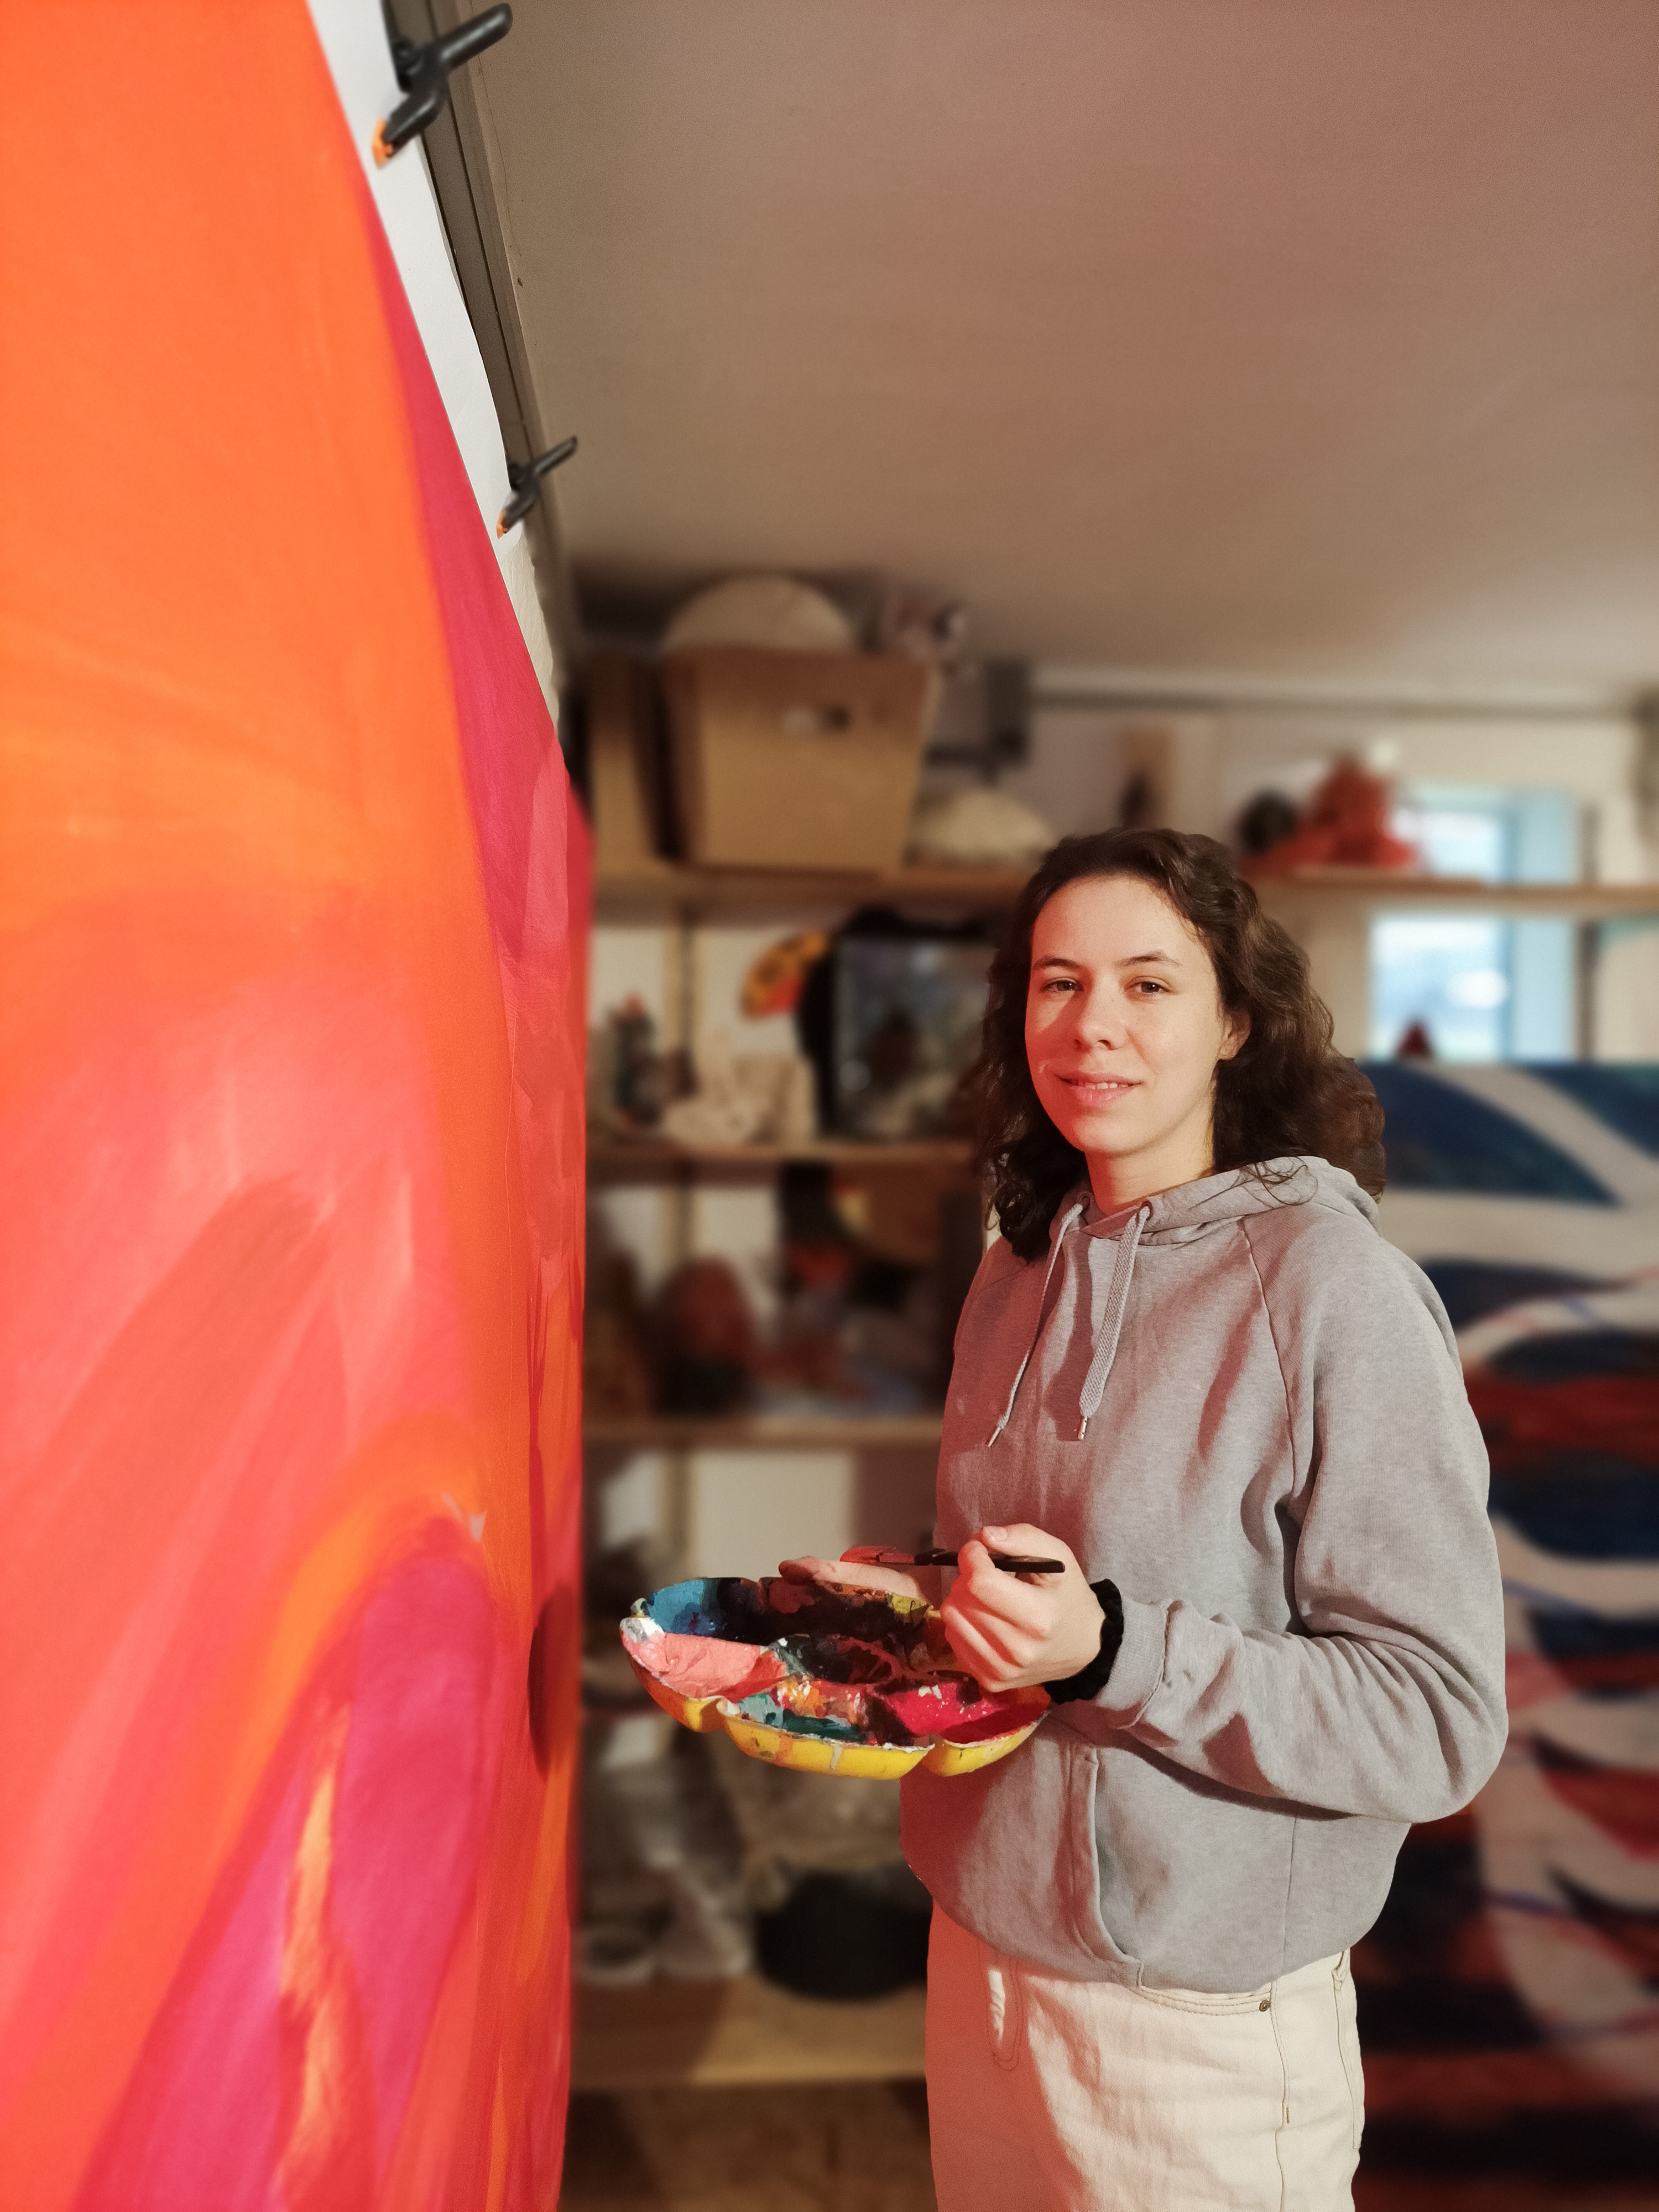 Katharina Kühne in her atelier, image author: K. J. Kühne*